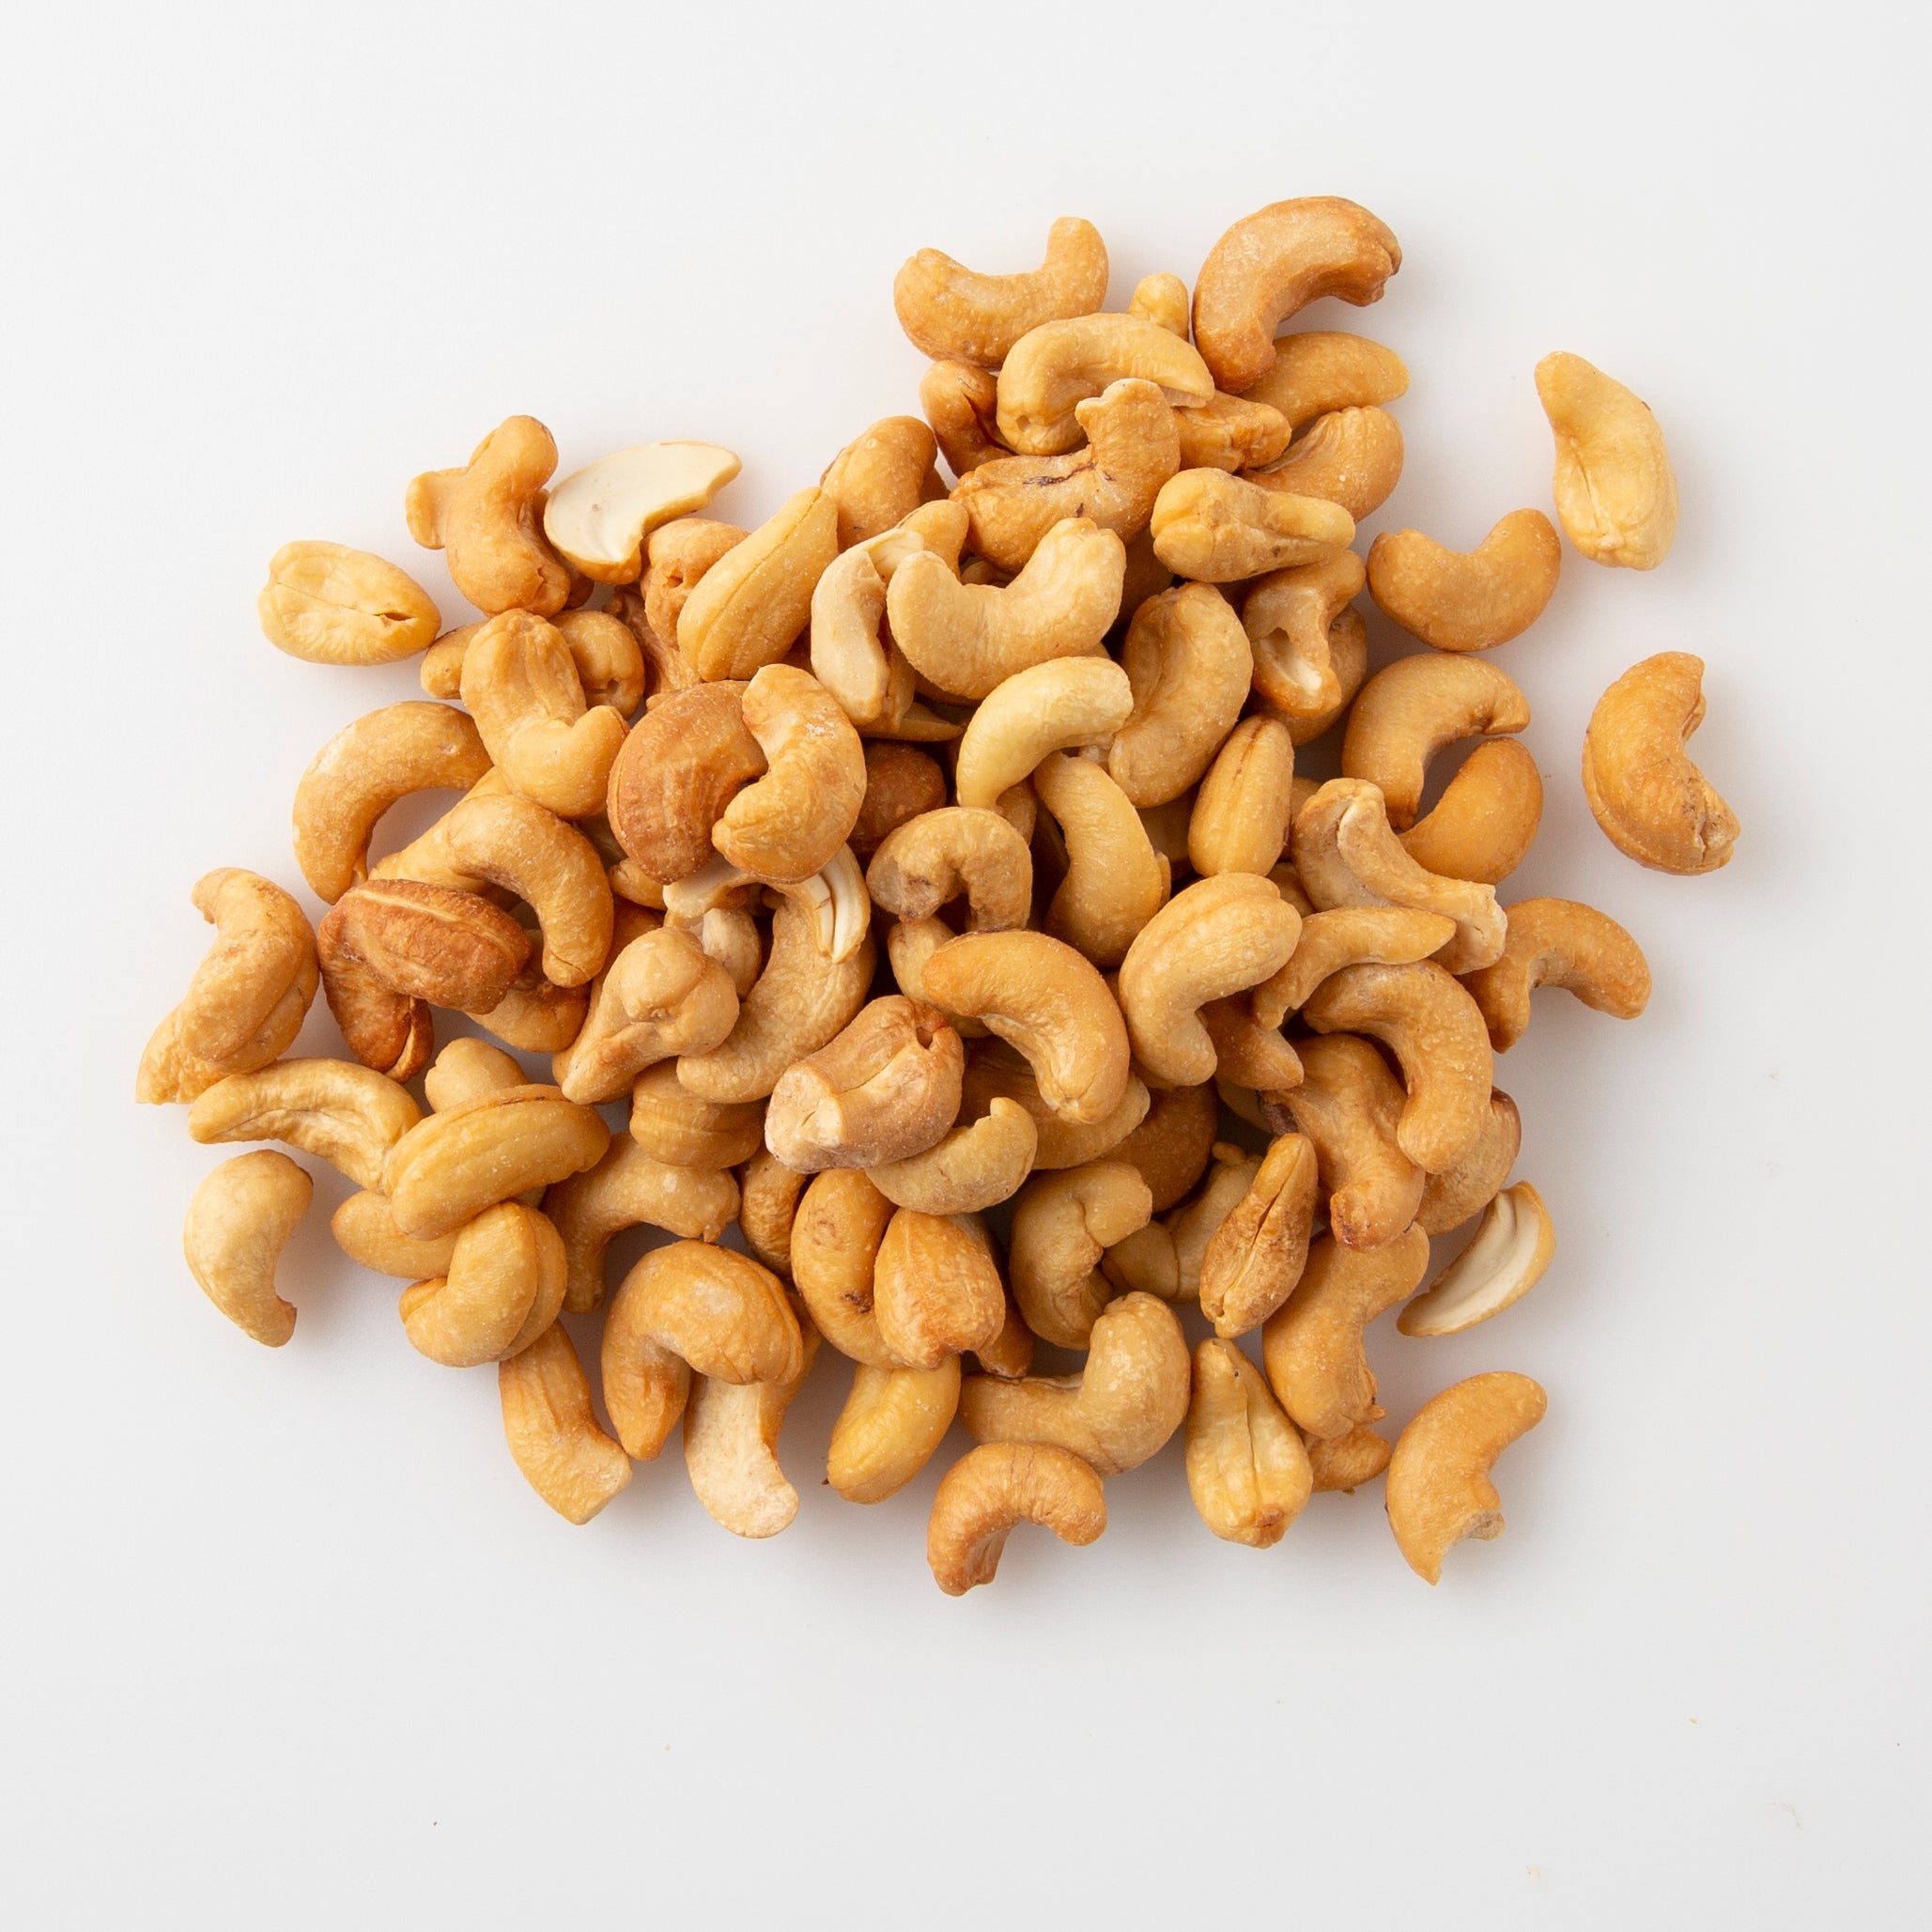 Roasted Unsalted Cashews (Roasted Nuts) Image 2 - Naked Foods